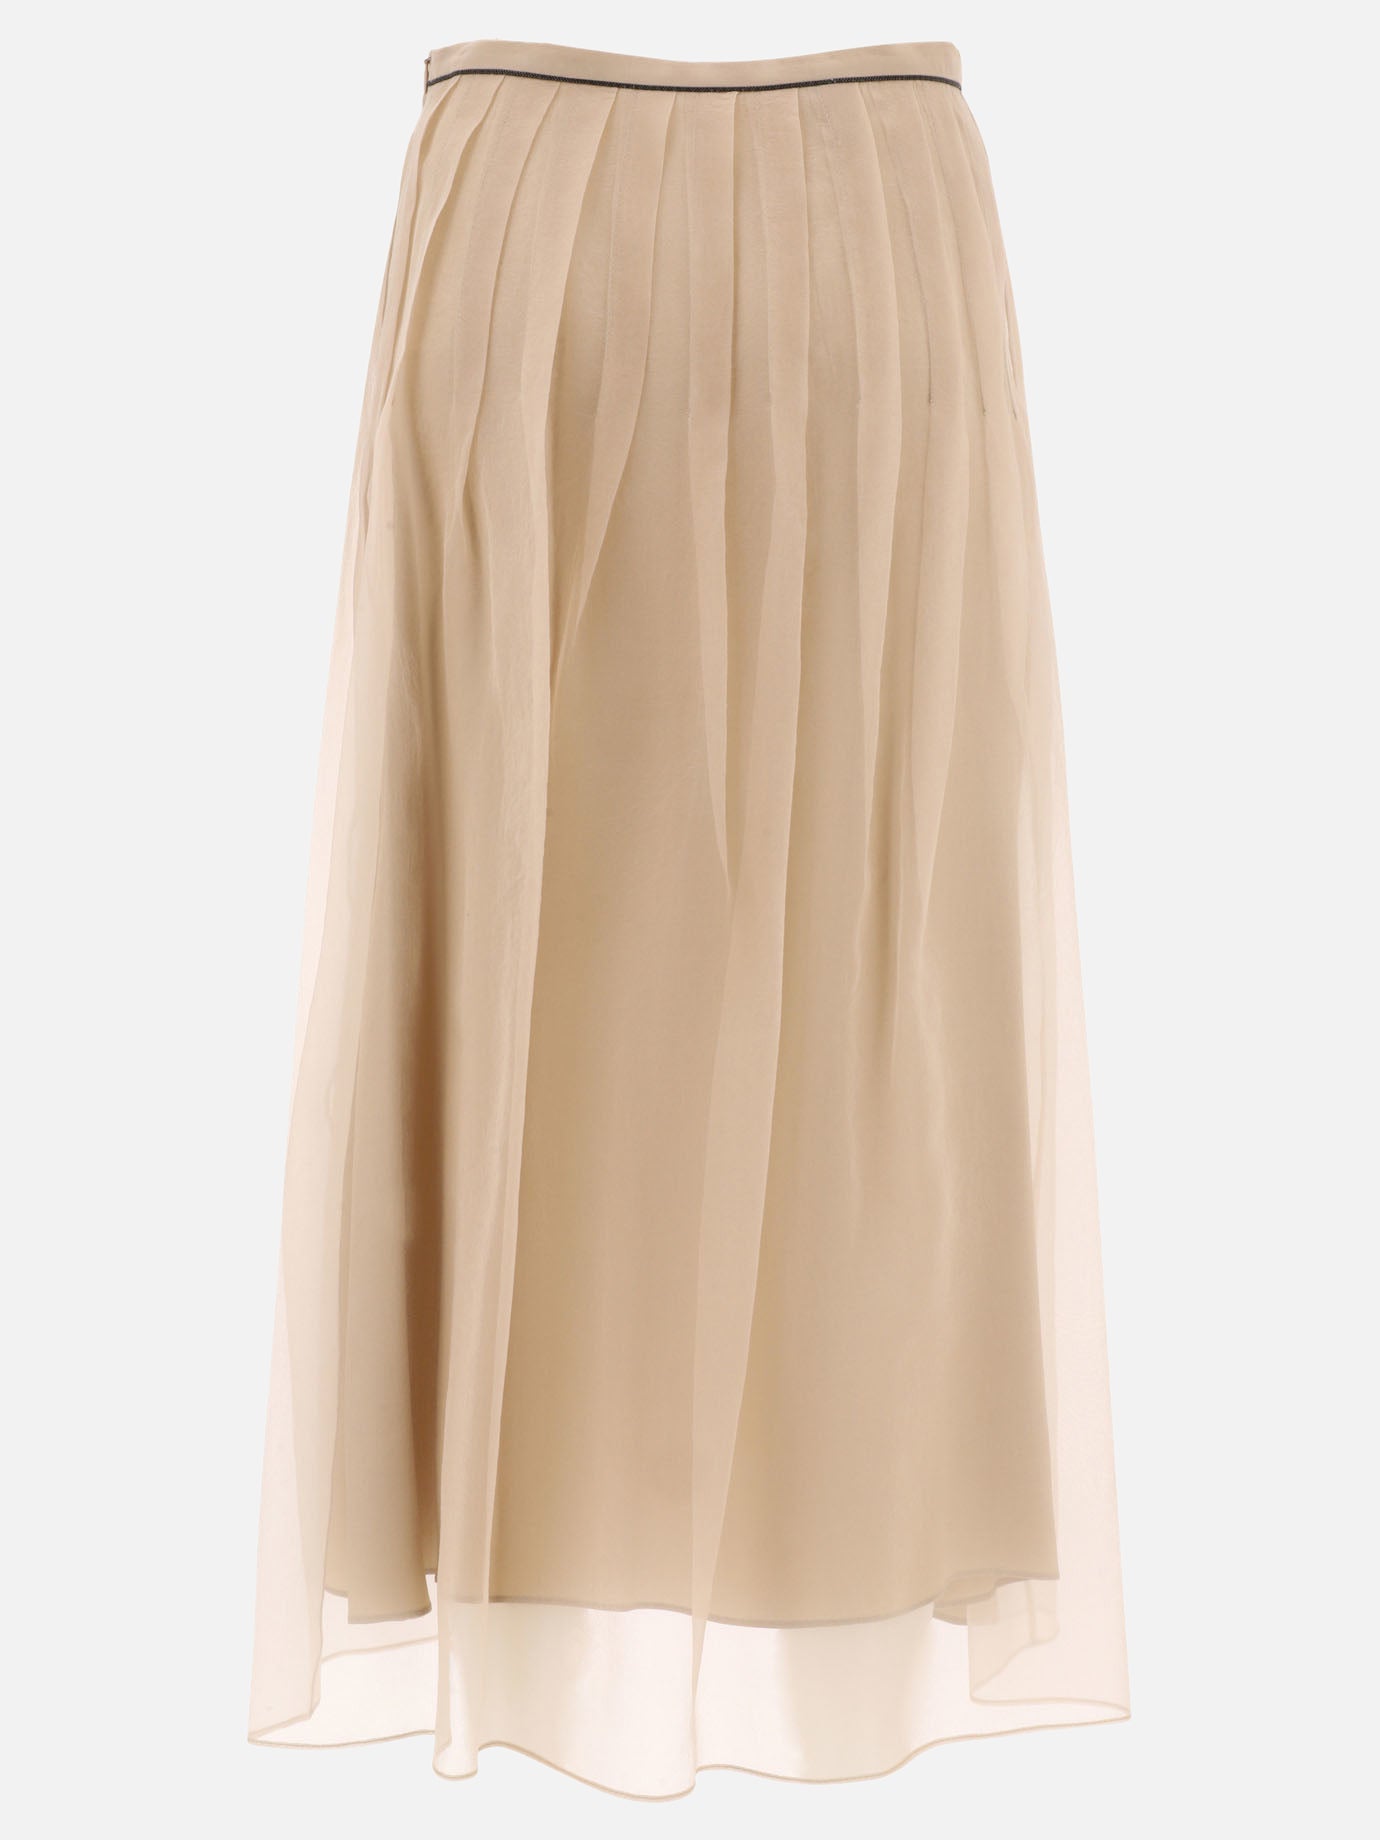 Pleated skirt with shiny waistband